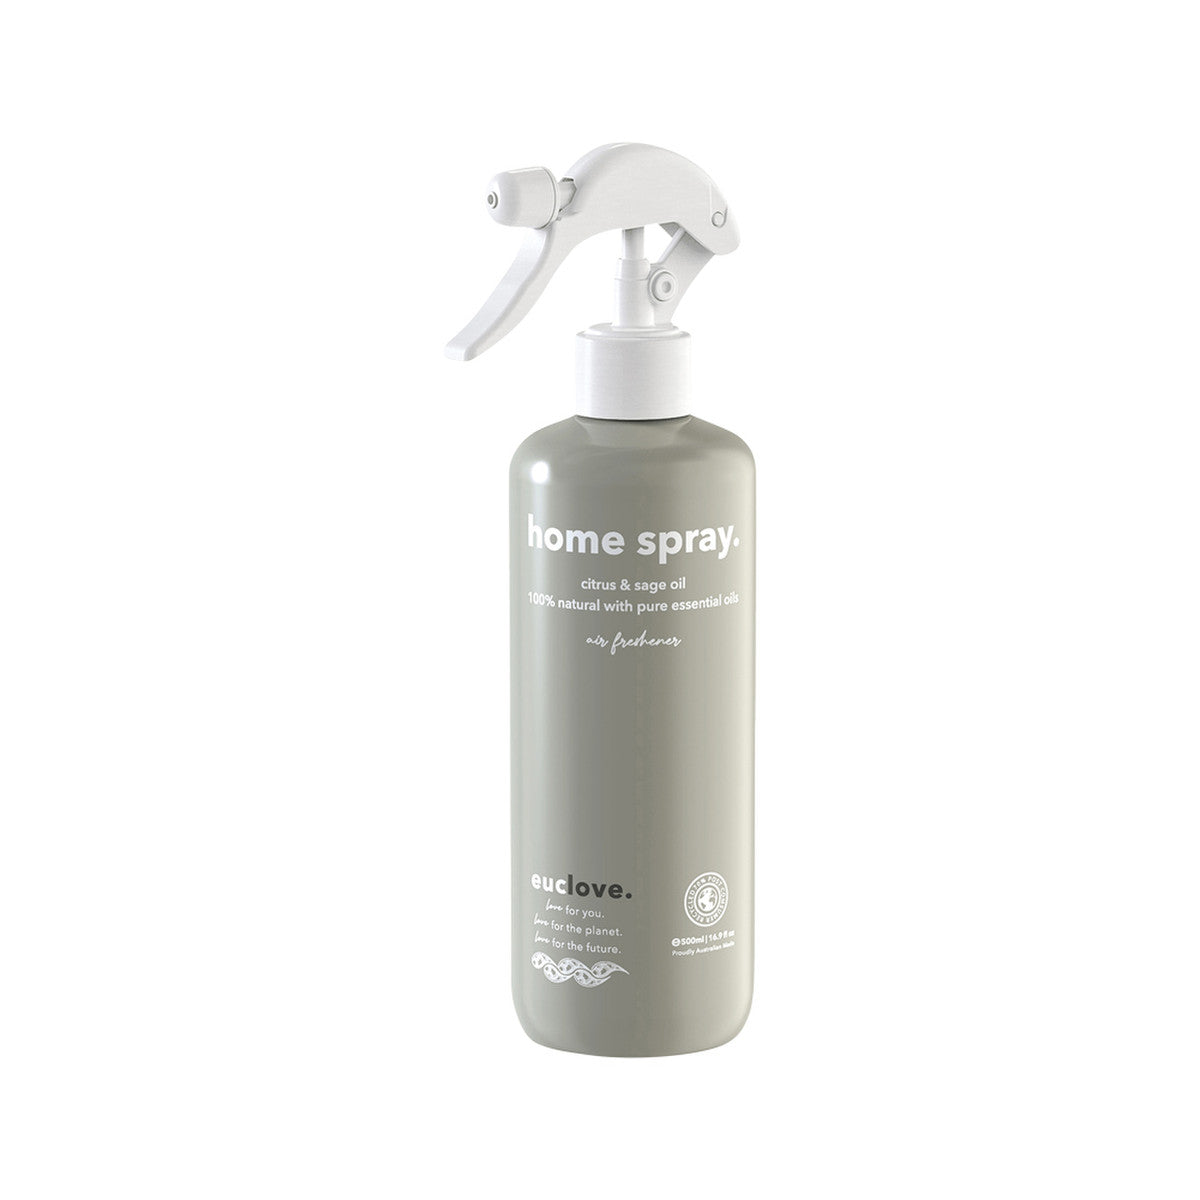 Euclove - Home Spray Citrus and Sage Blend 500ml Spray